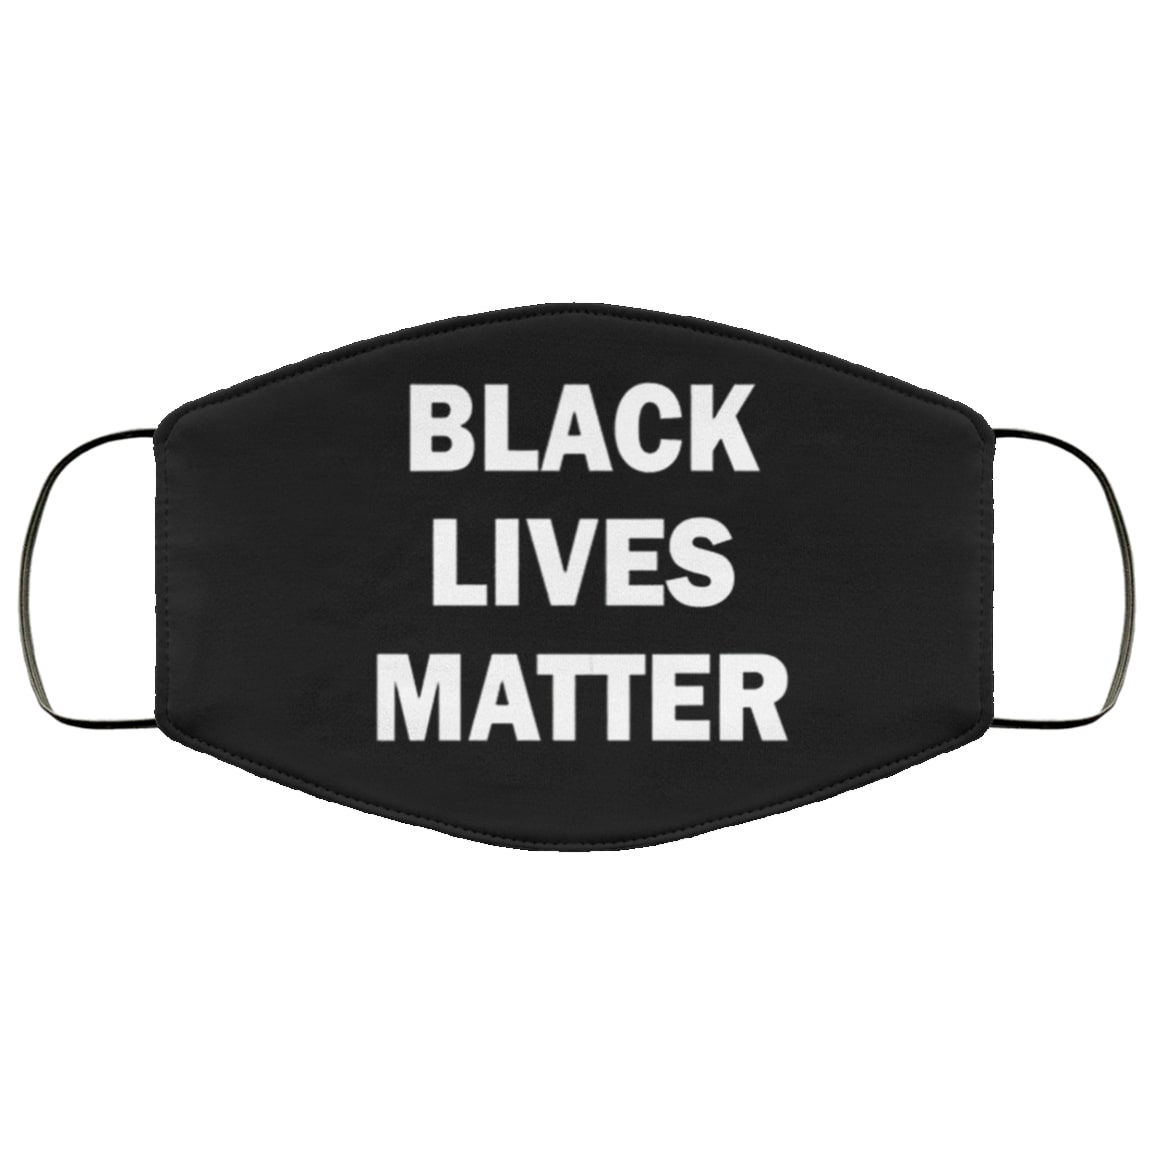 Black lives matter anti pollution face mask - maria